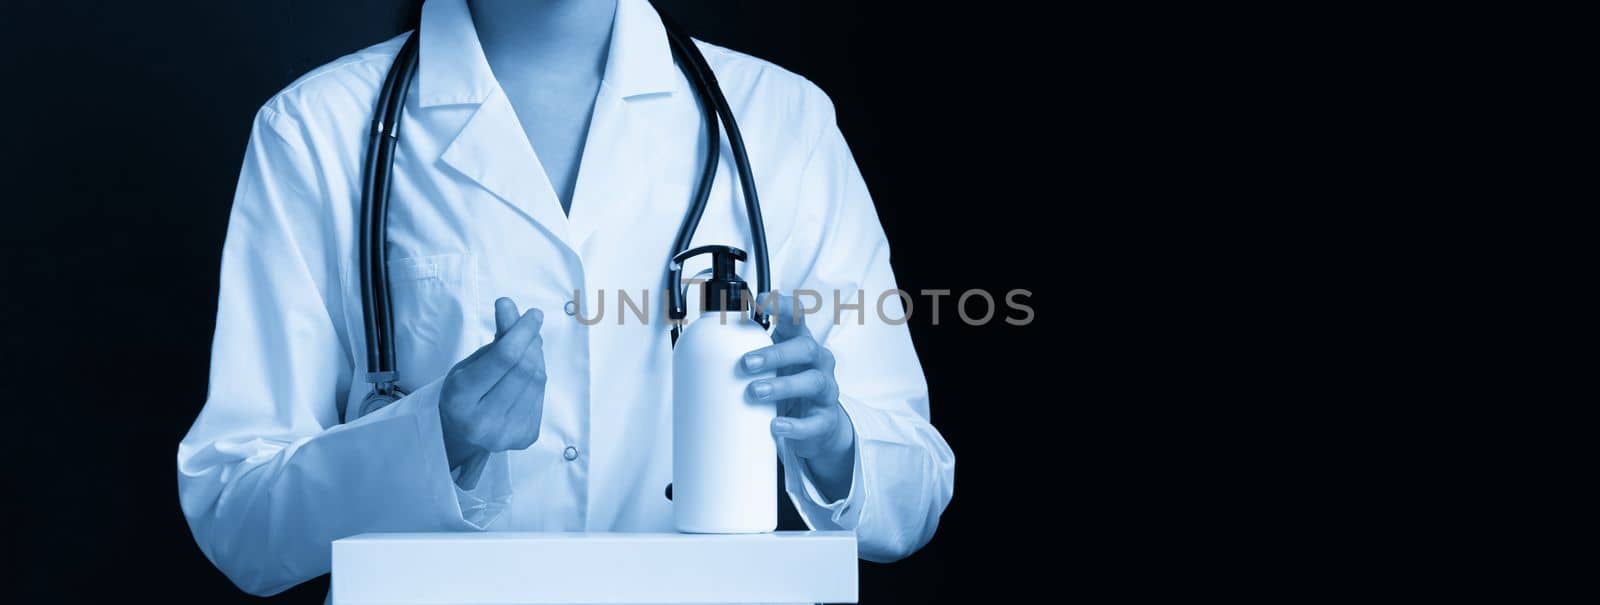 doctor applying antibacterial spray on hand in hospital